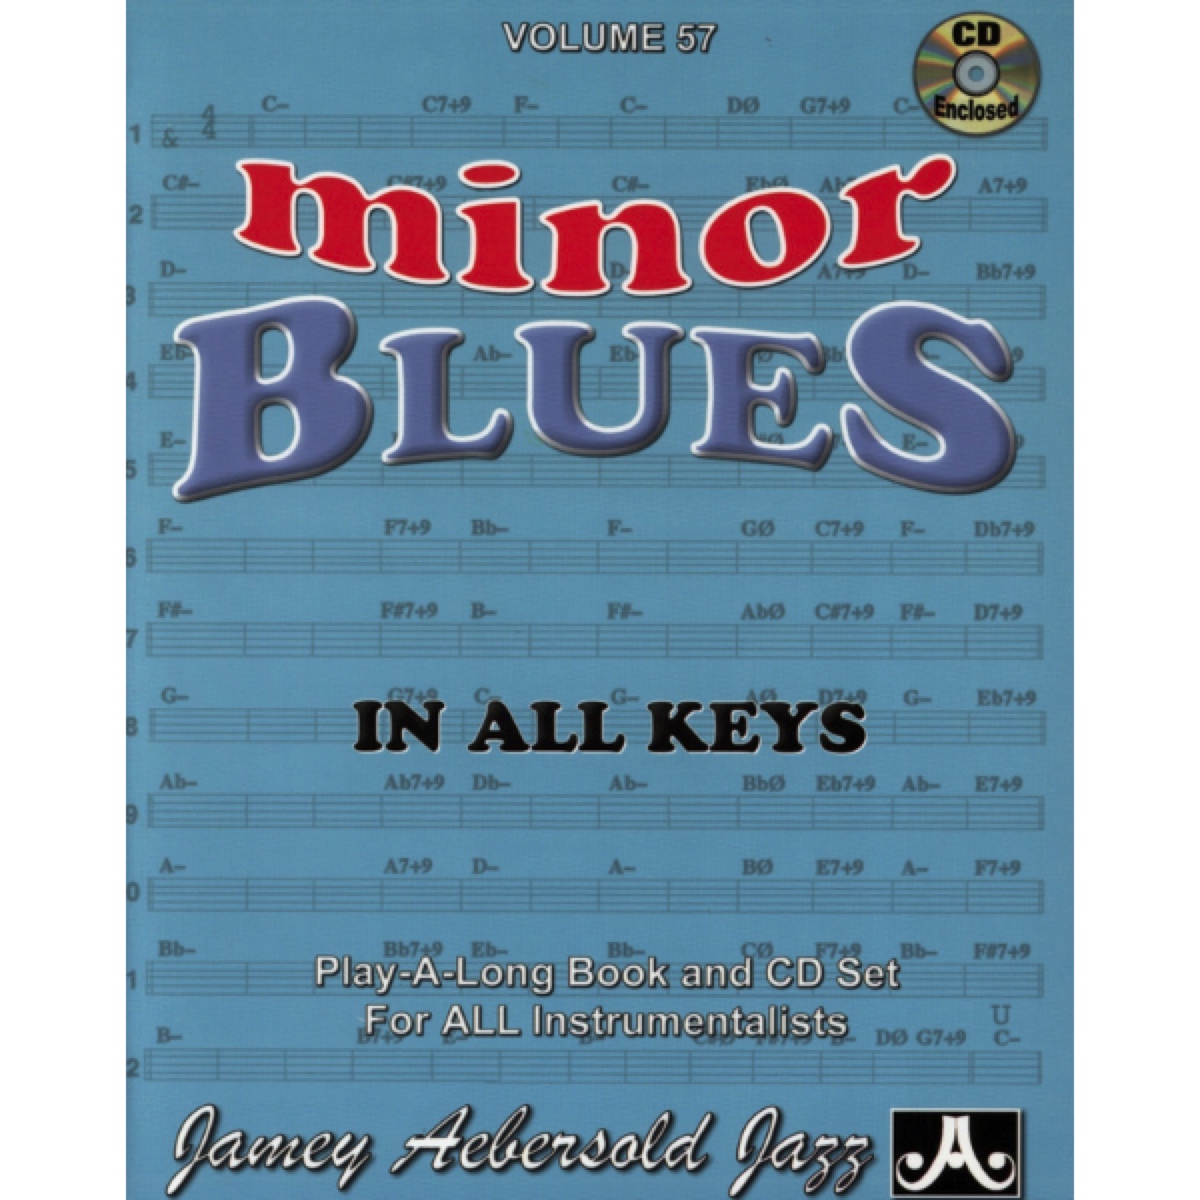 Aebersold vol. 57: Minor Blues In All Keys